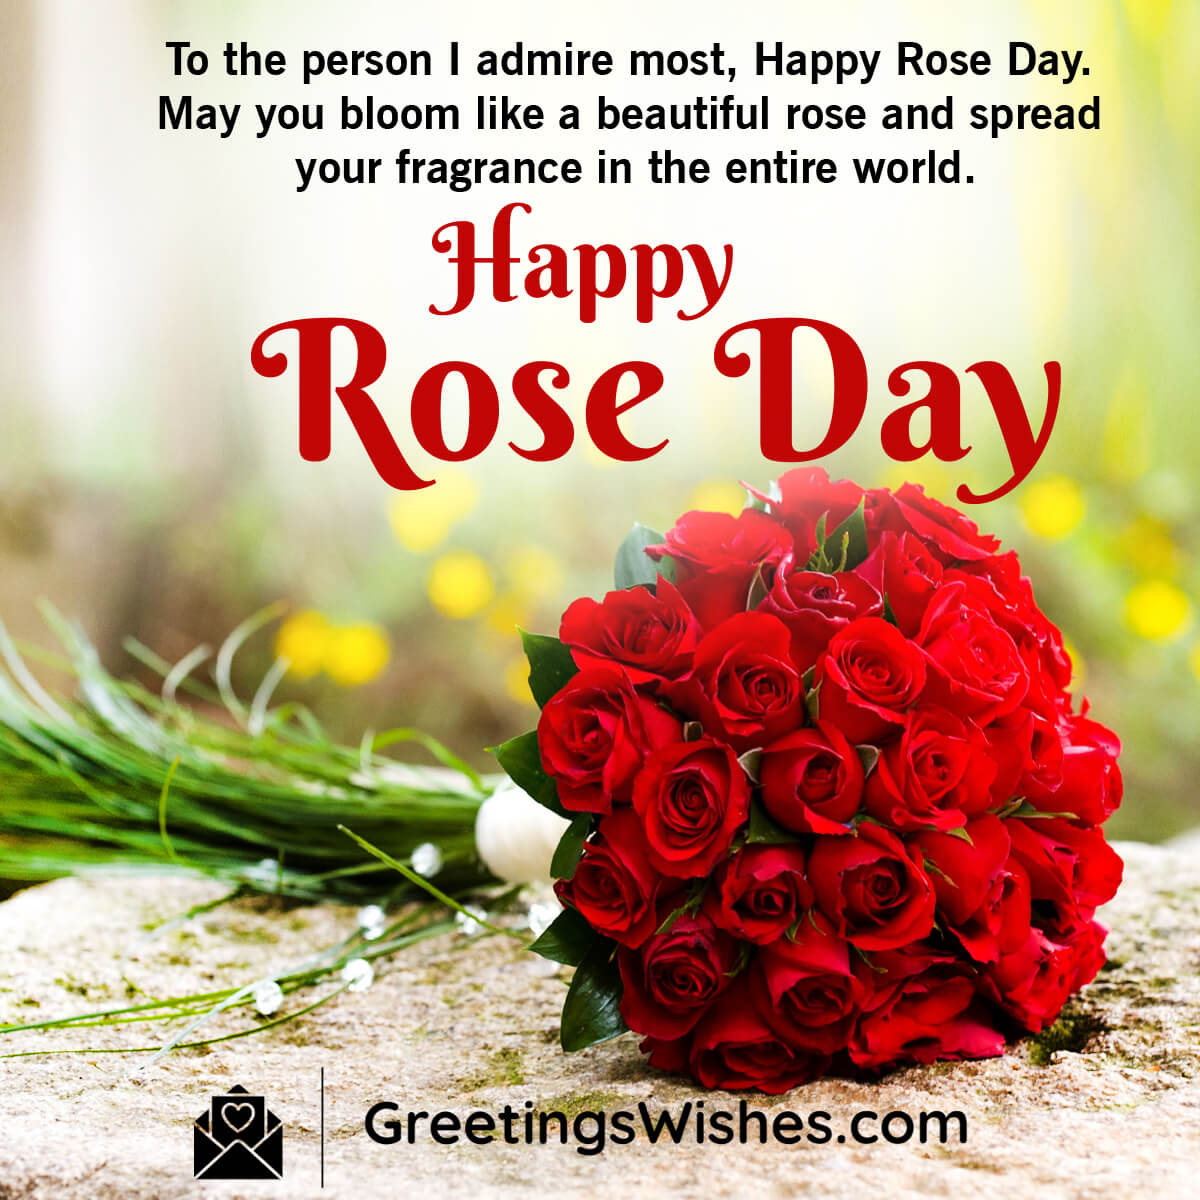 Rose Day